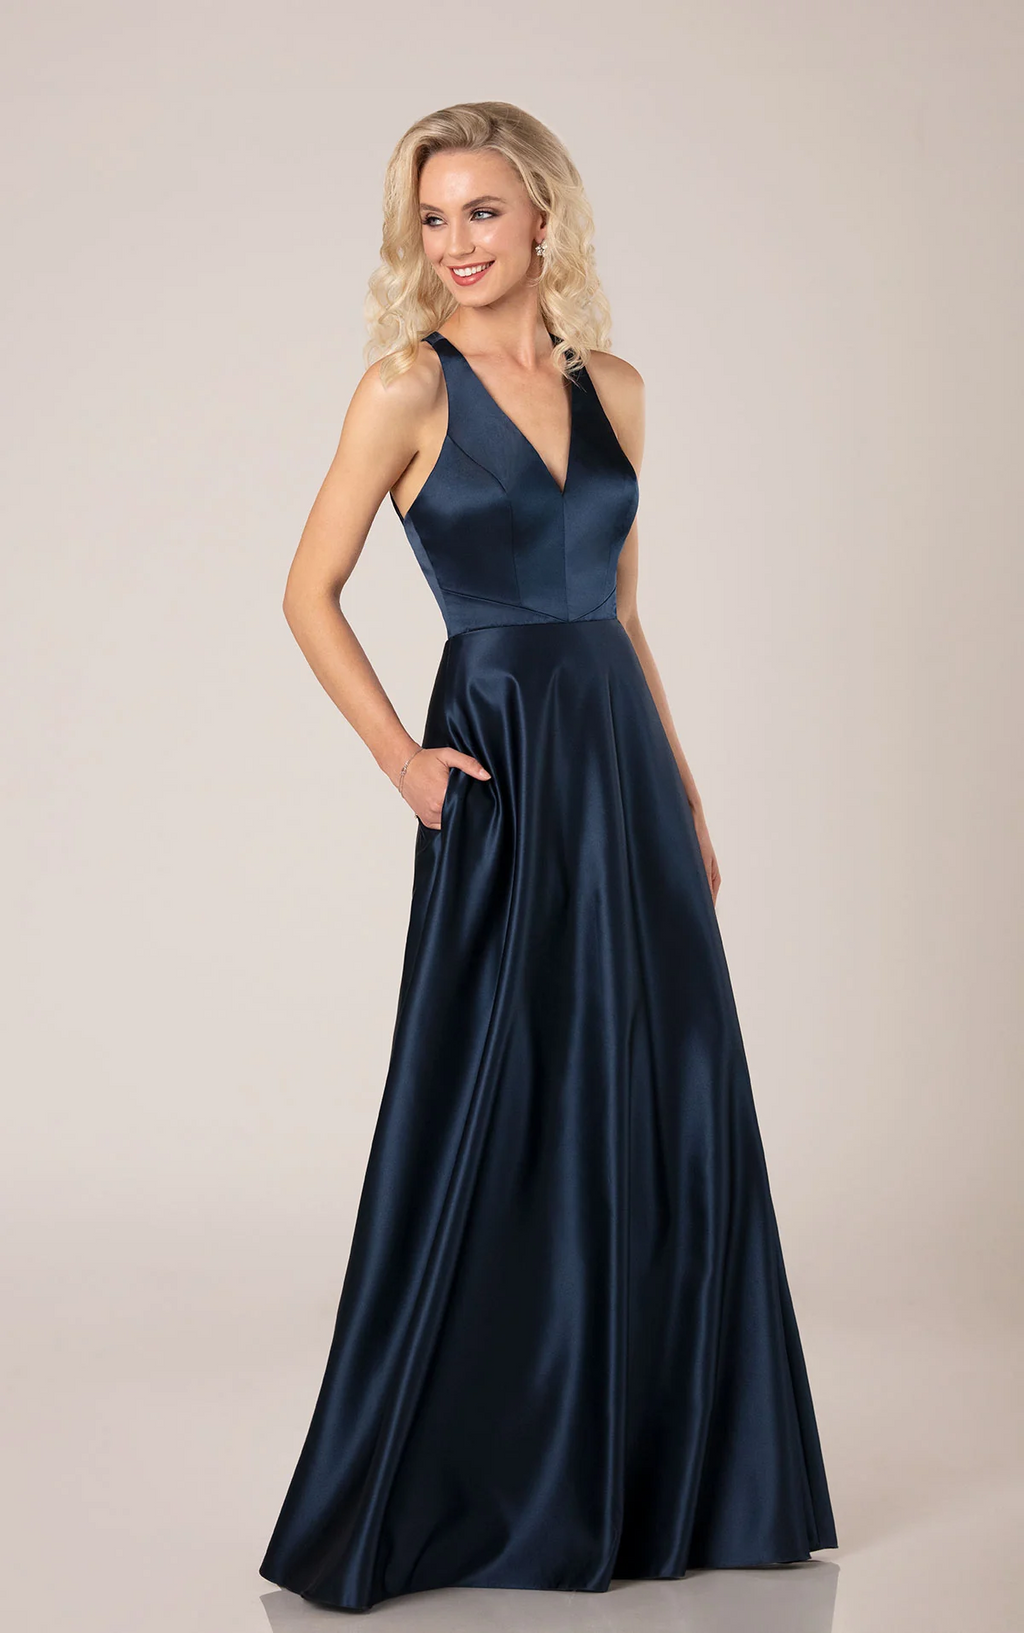 Sorella Vita Dress Style 9376 (Navy-Size 14) Prom, Ball., Black-tie, Bridesmaid, Pageant (Copy)